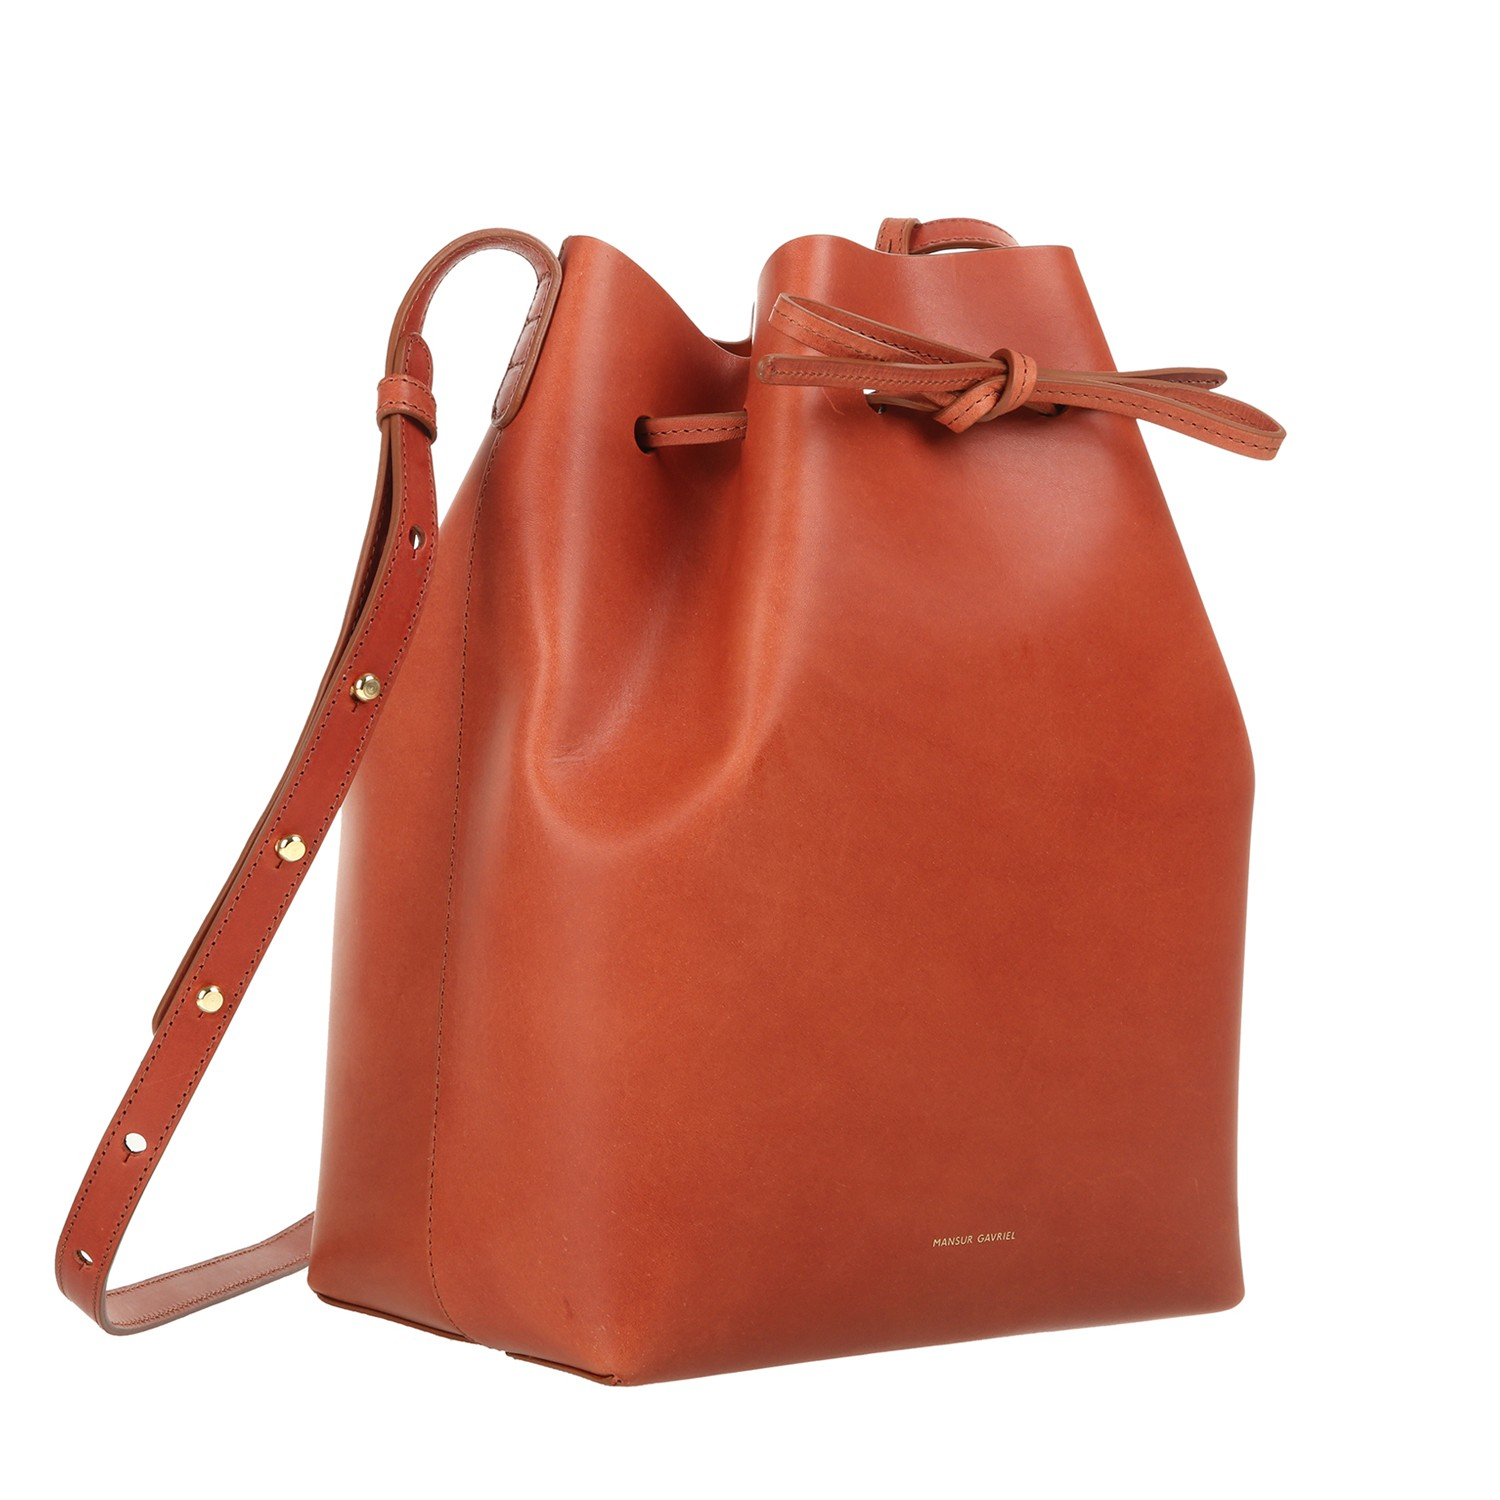 Mansur gavriel Bucket Bag in Orange | Lyst